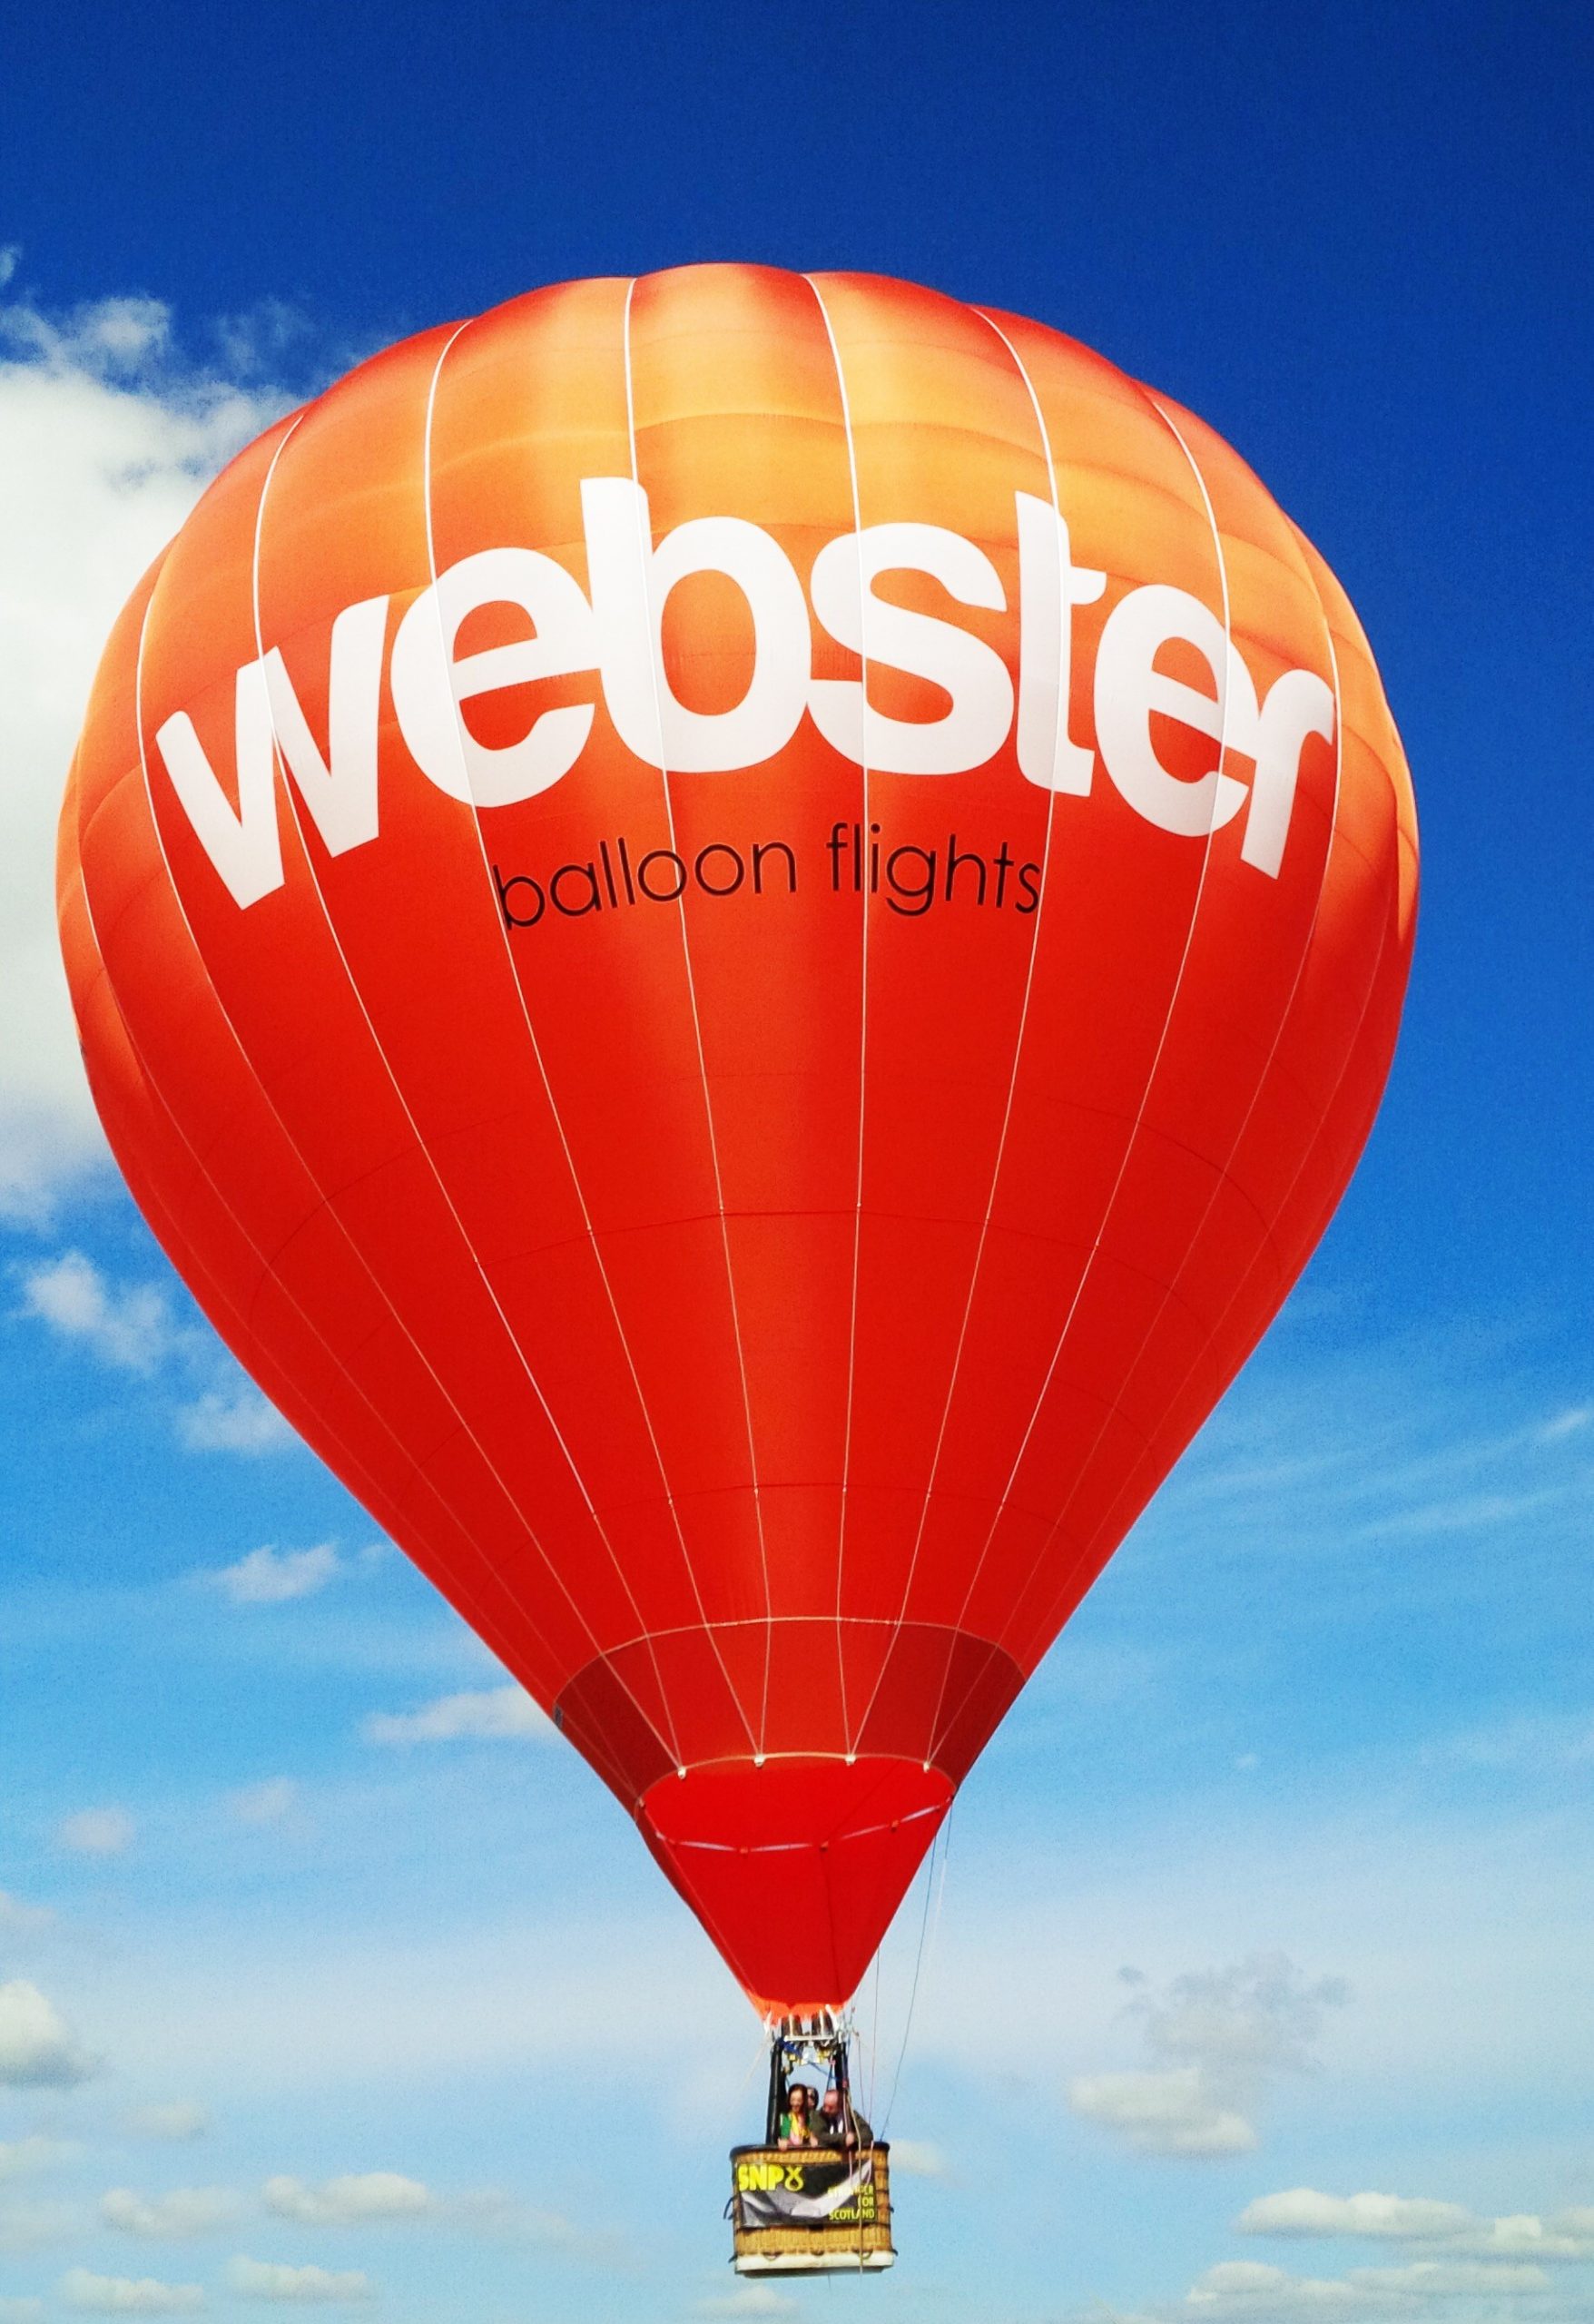 websterballoon3 - Business News Scotland